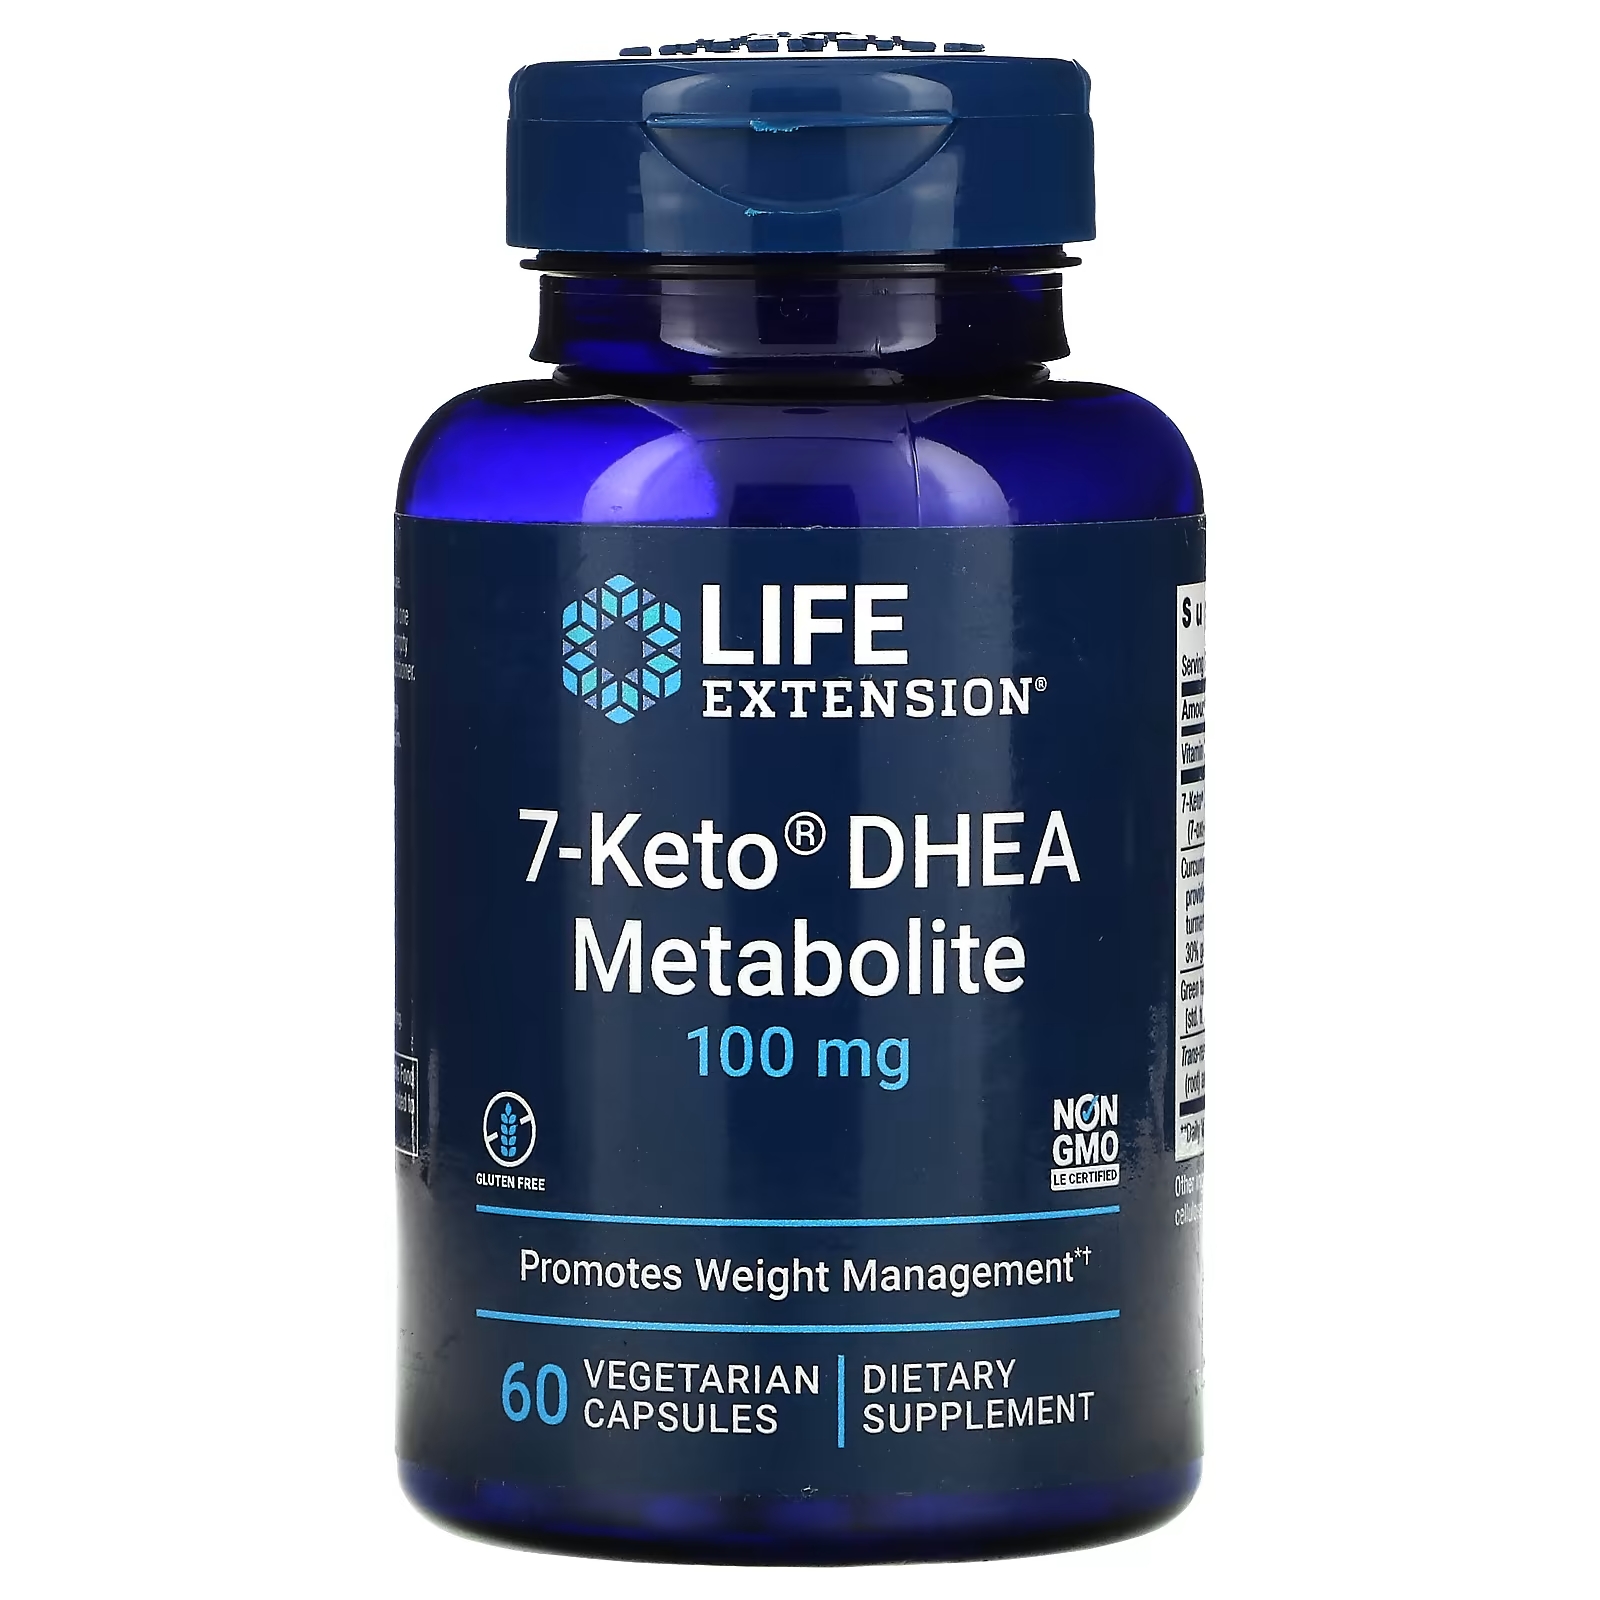 ДГЭА Метаболит Life Extension 7-Keto, 60 капсул life extension метаболит 7 кето дгэа 100 мг 60 вег капсул